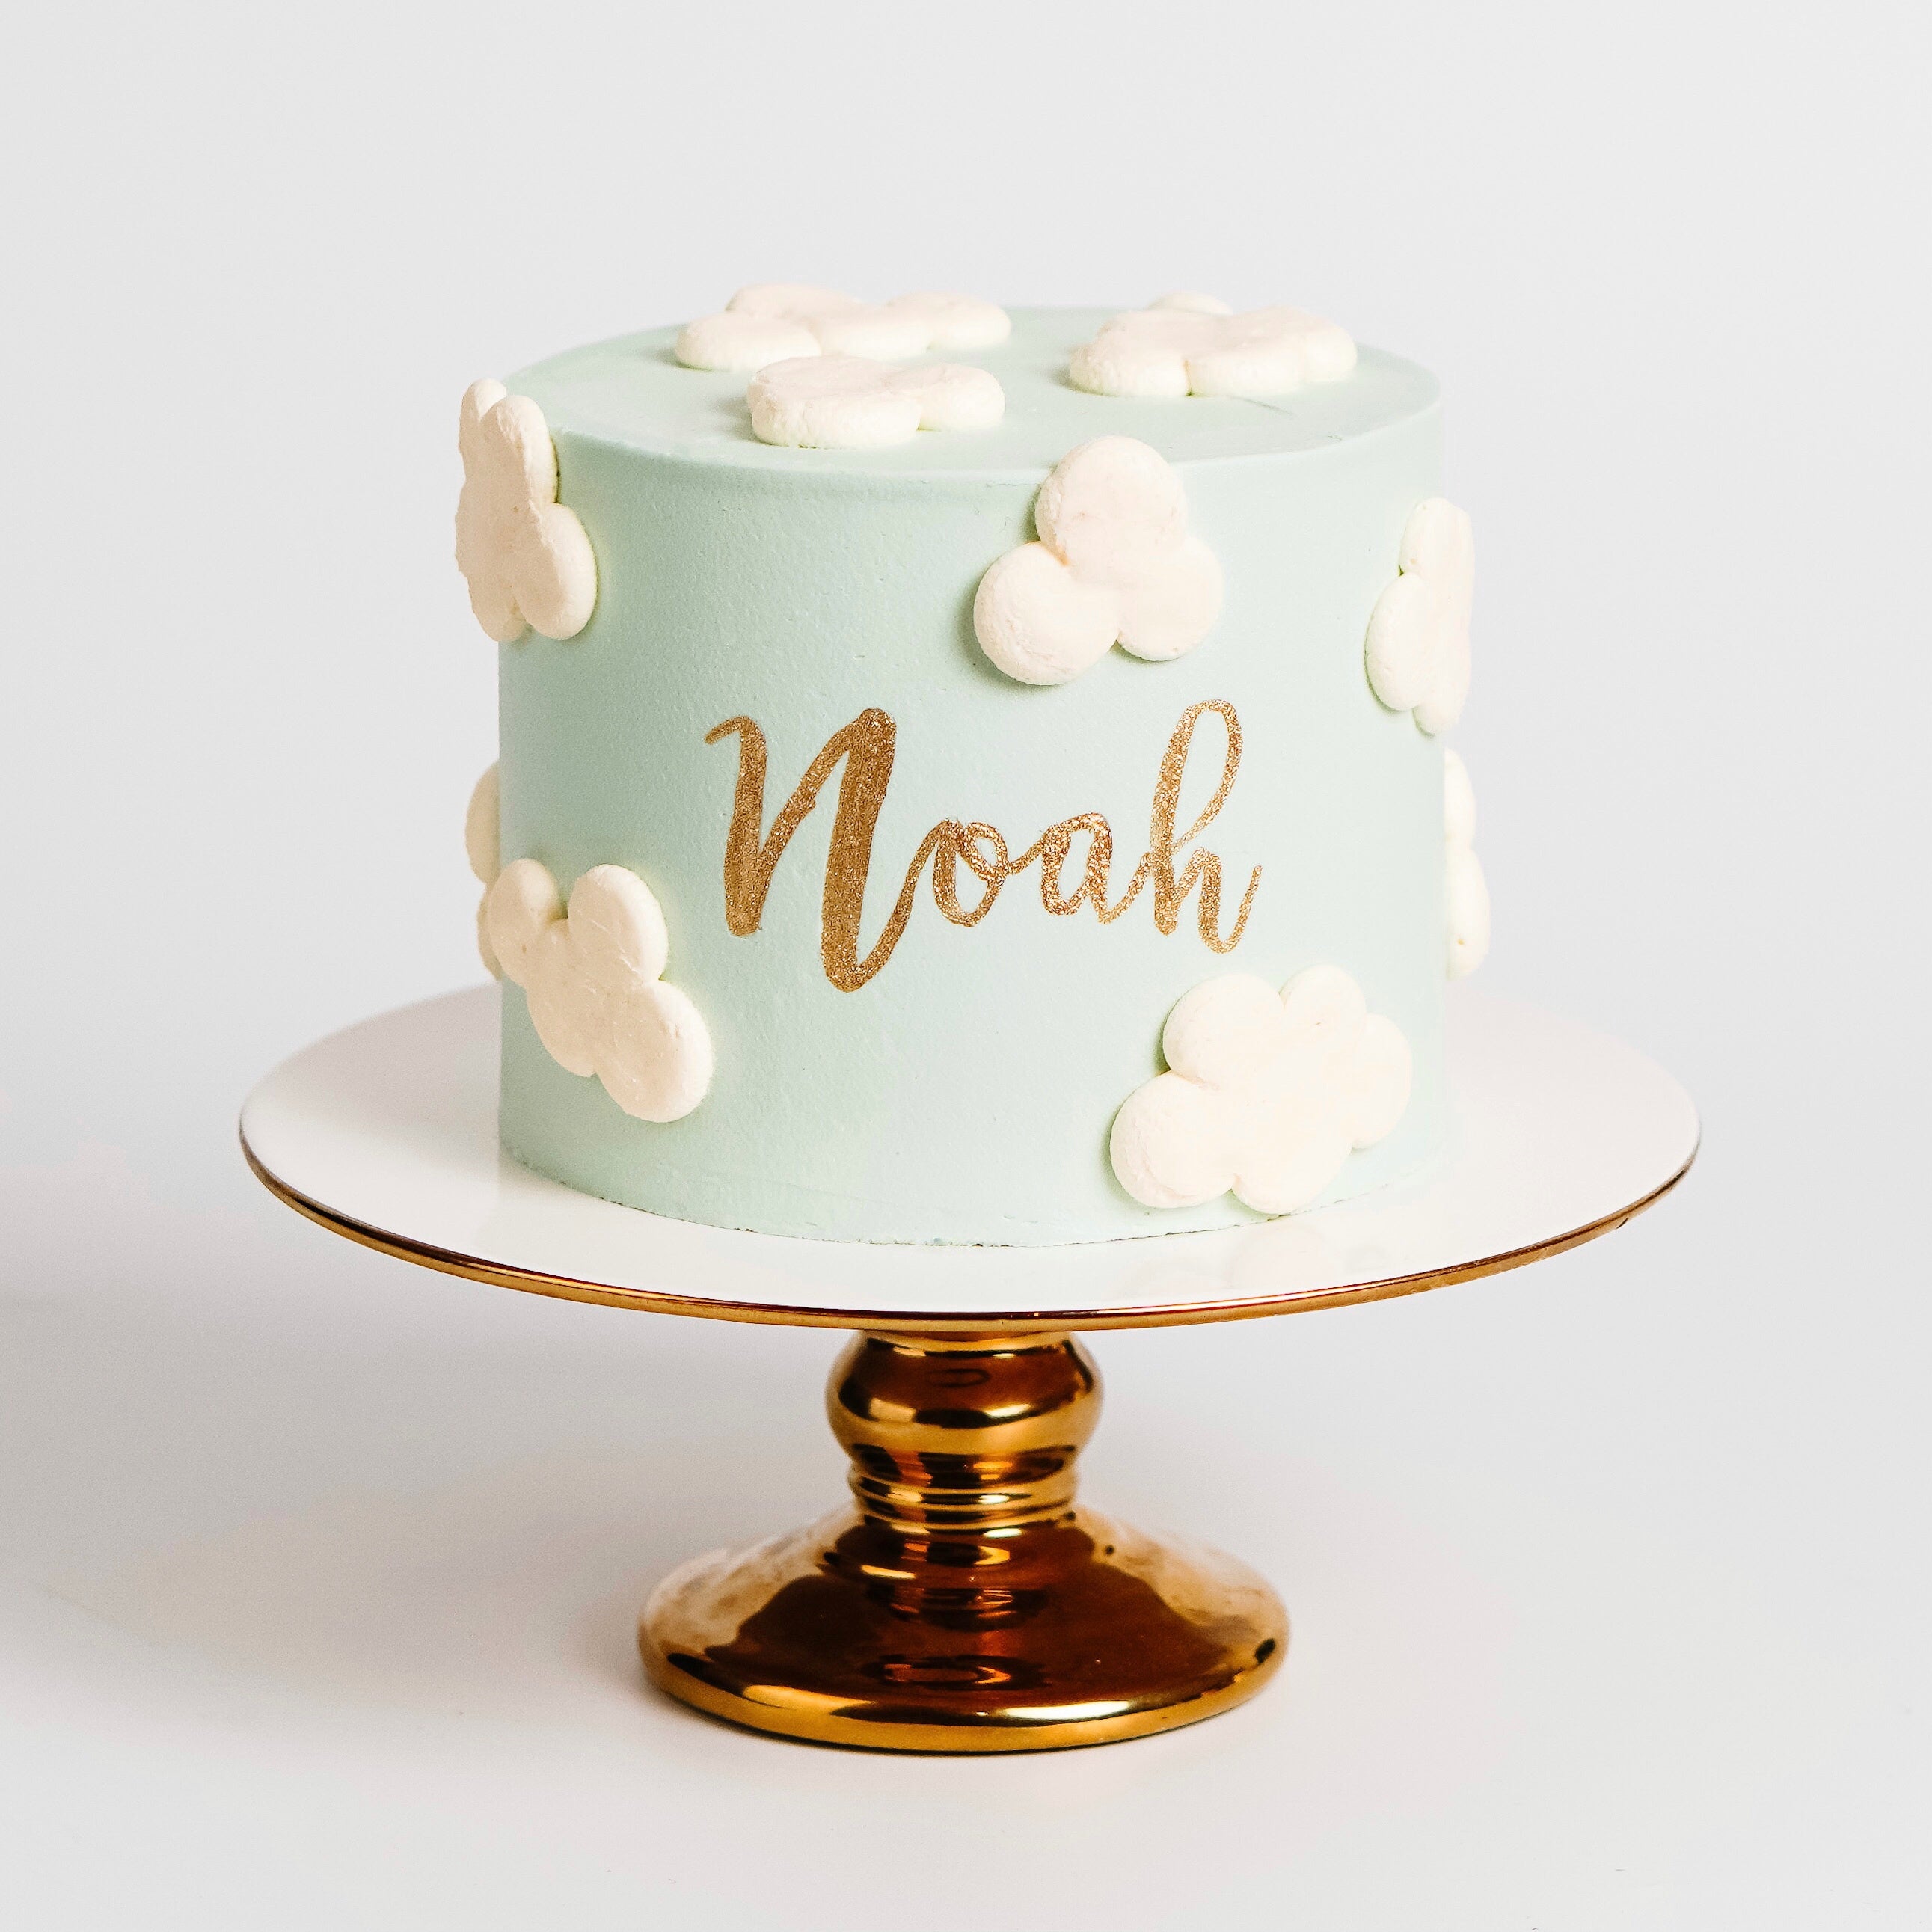 Plane & Clouds Cake | Sarah's Sweets & Treats